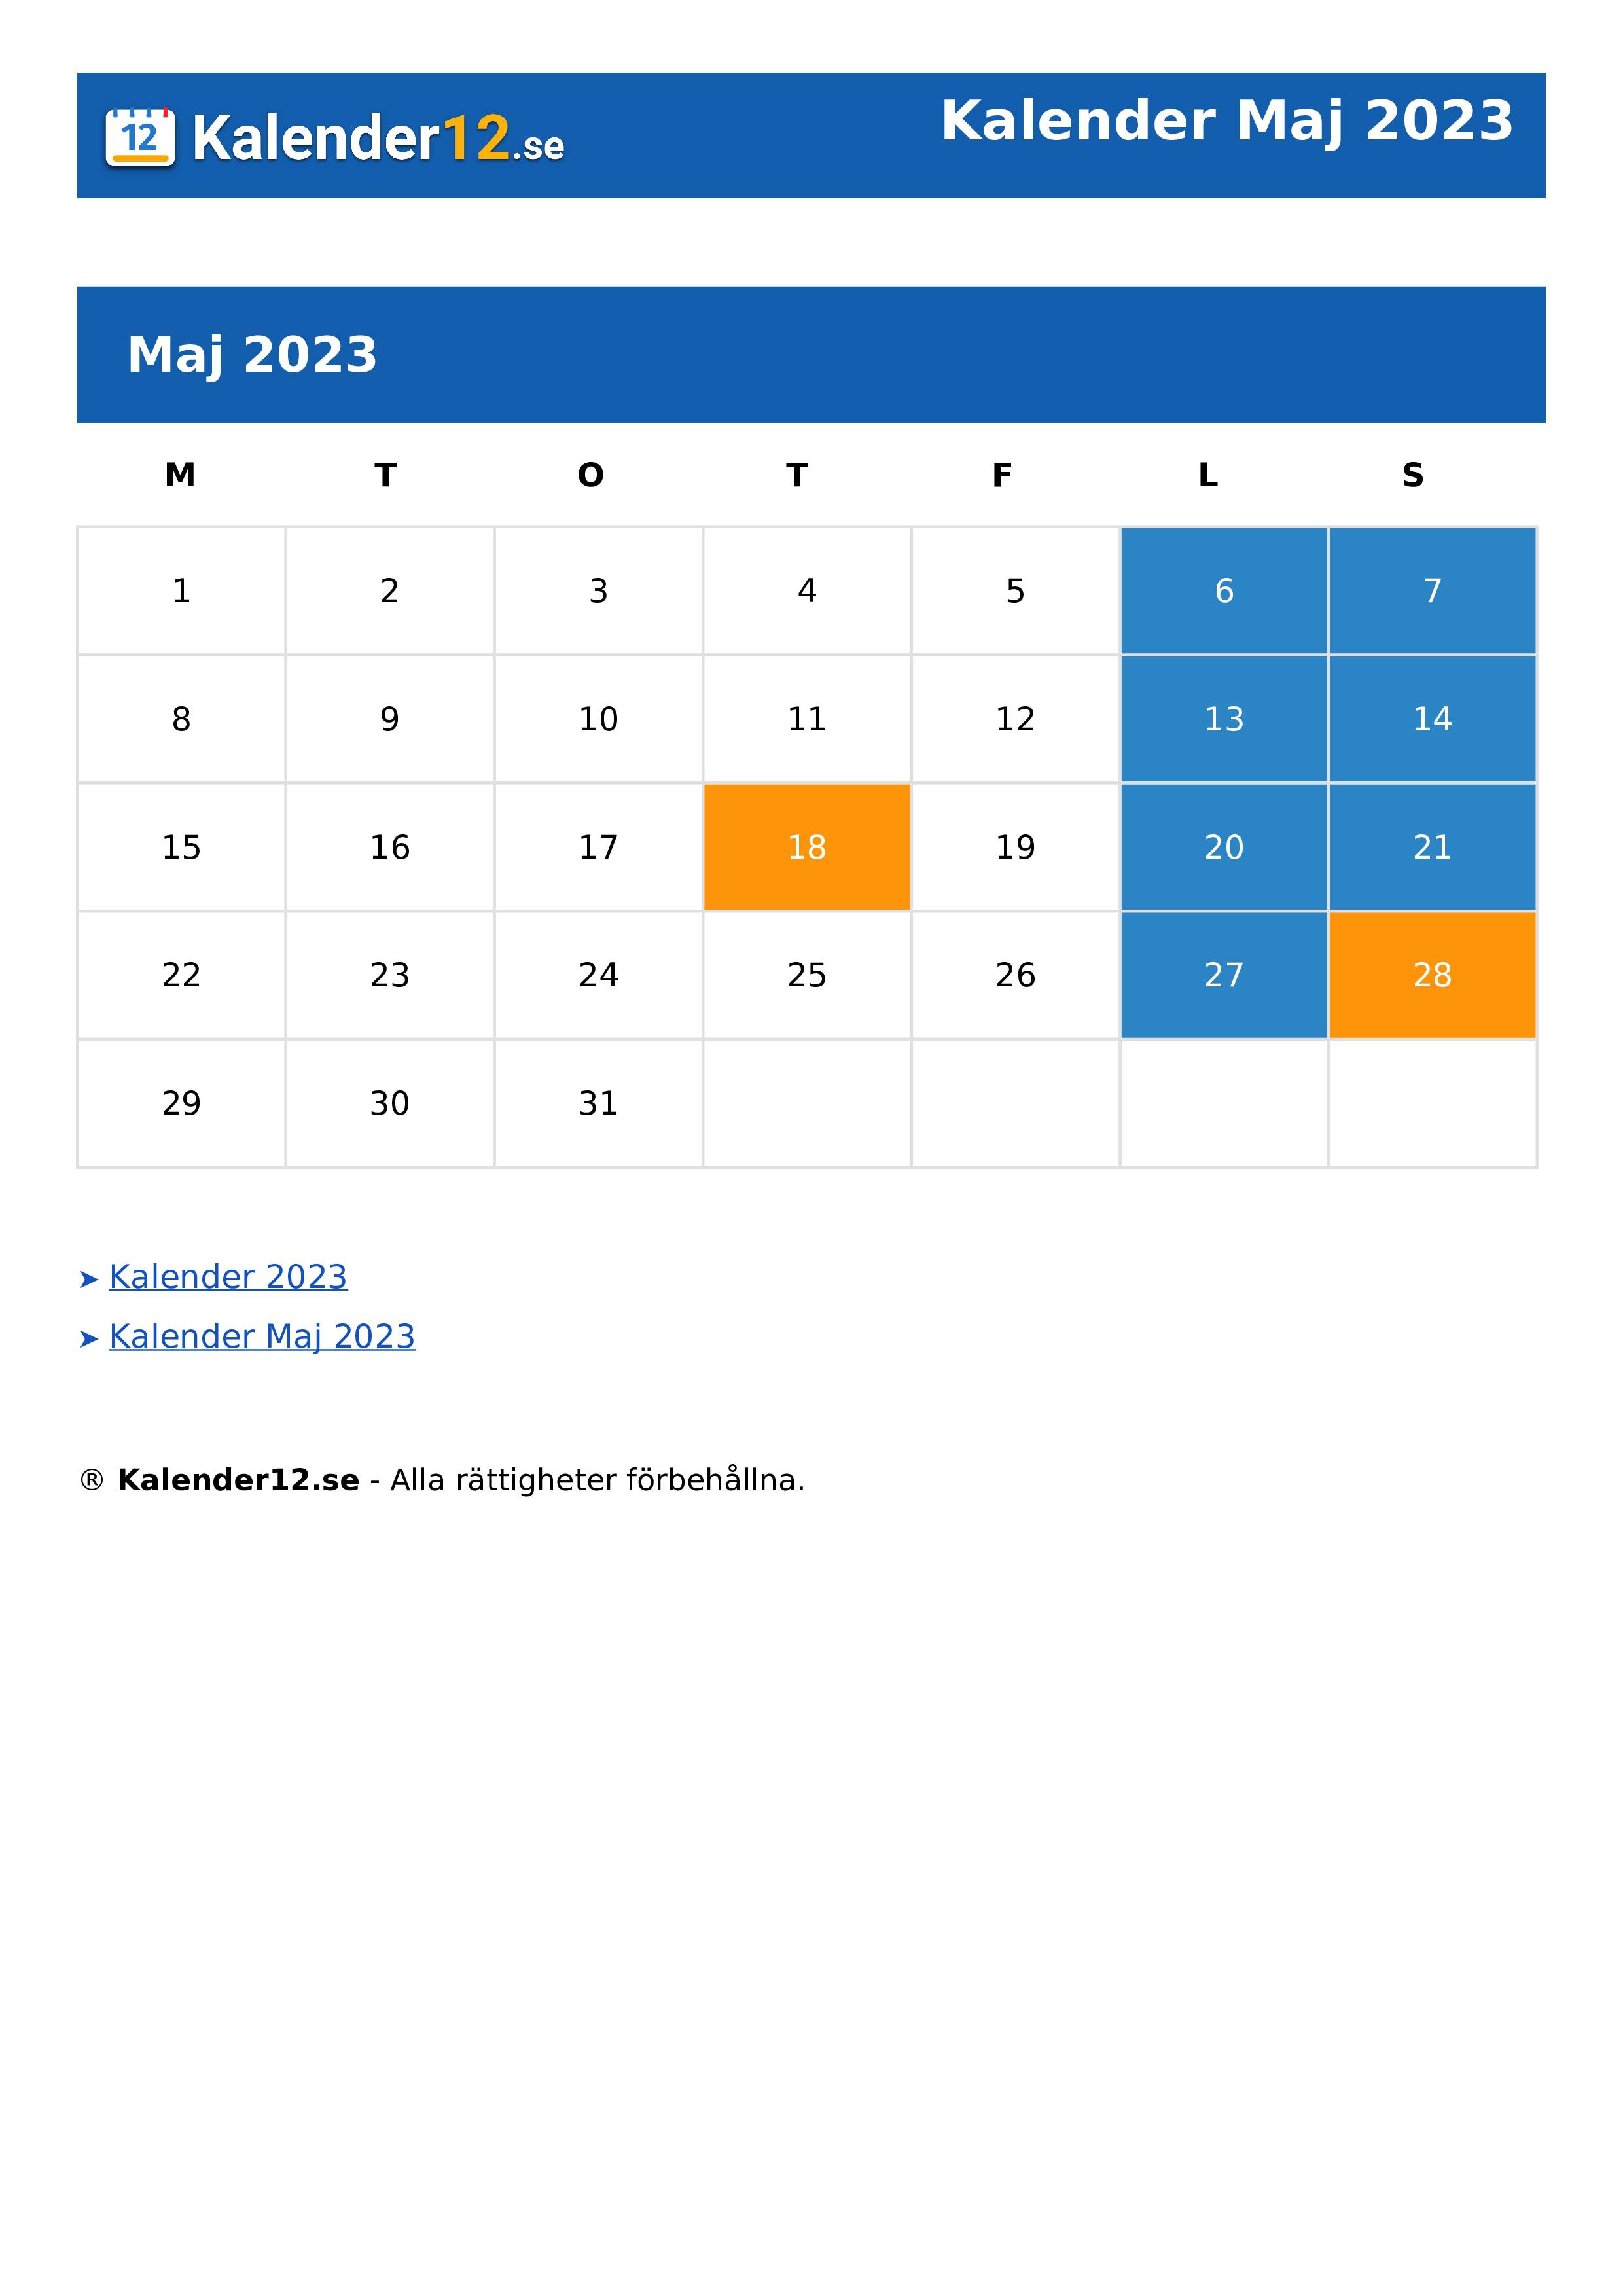 Calendar Maj 2023